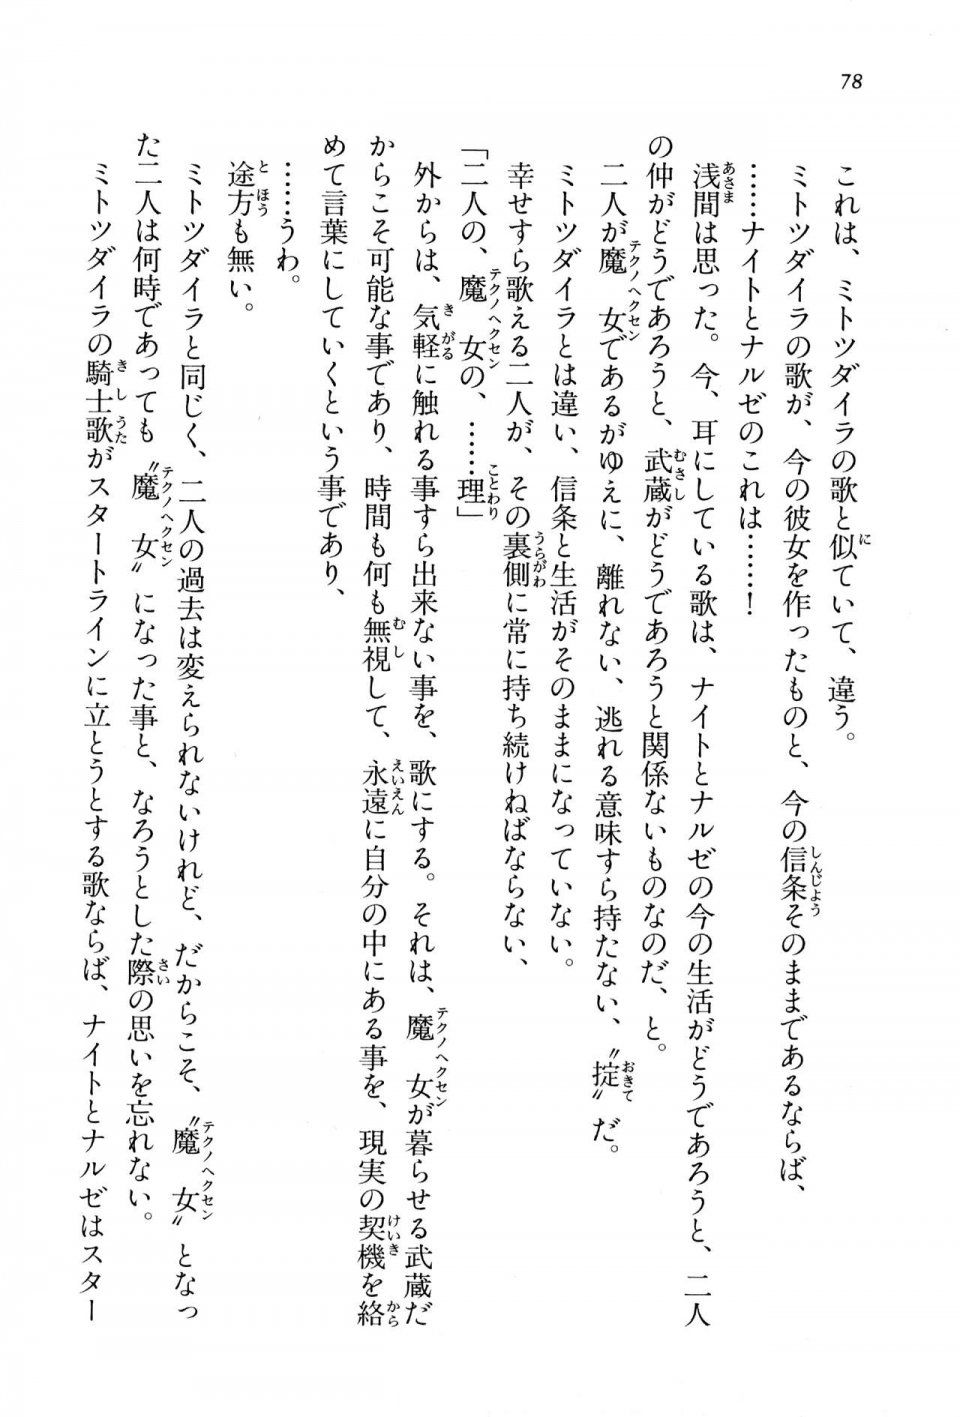 Kyoukai Senjou no Horizon BD Special Mininovel Vol 3(2A) - Photo #82